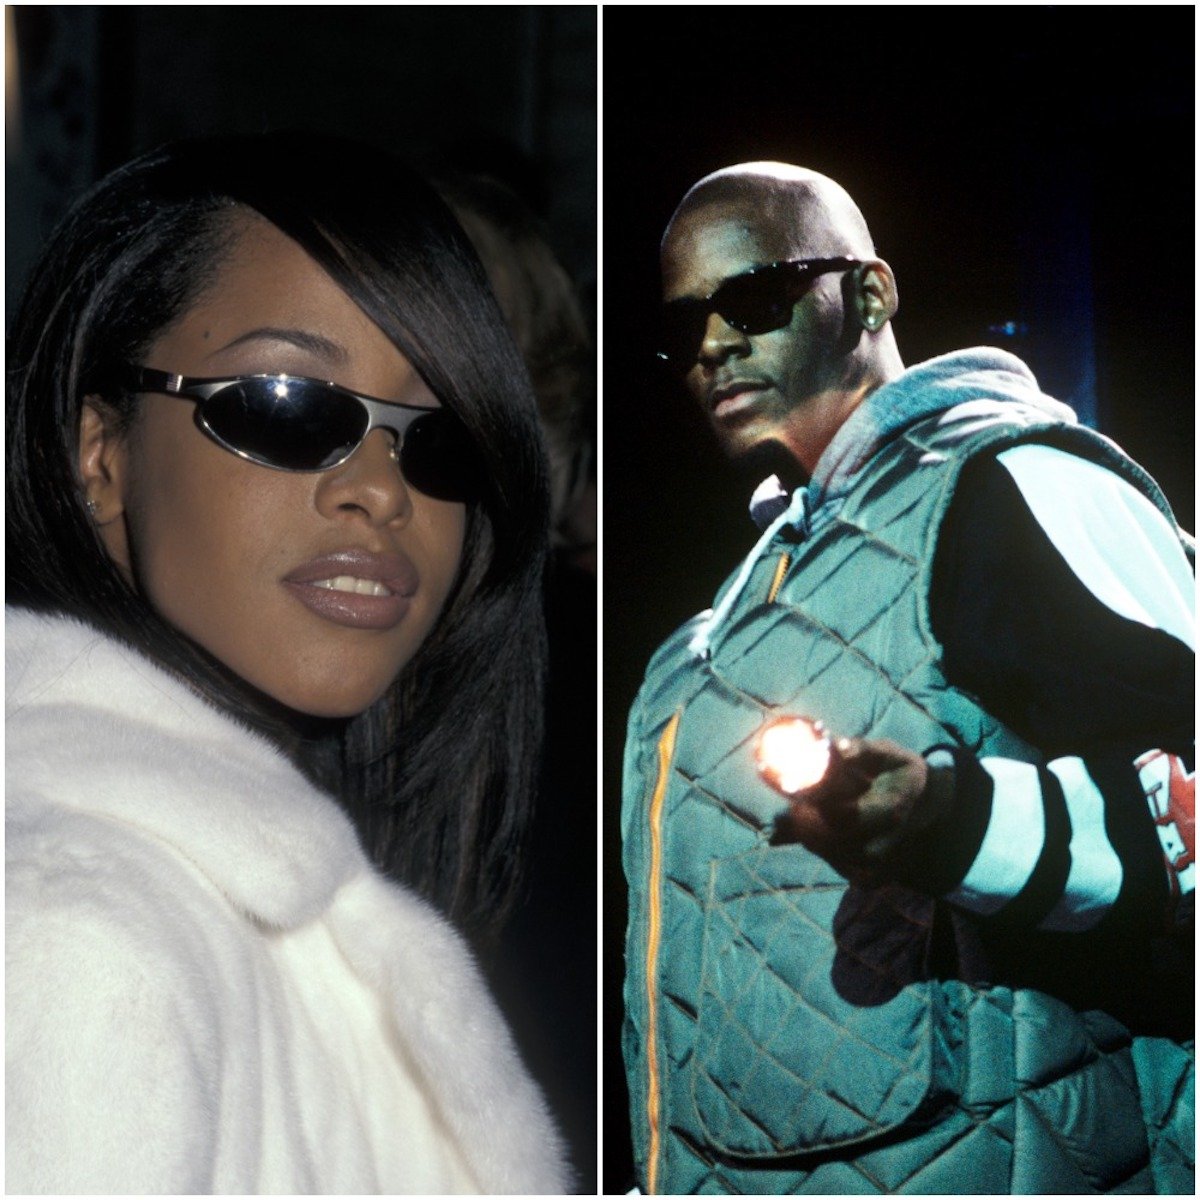 Aaliyah and R. Kelly